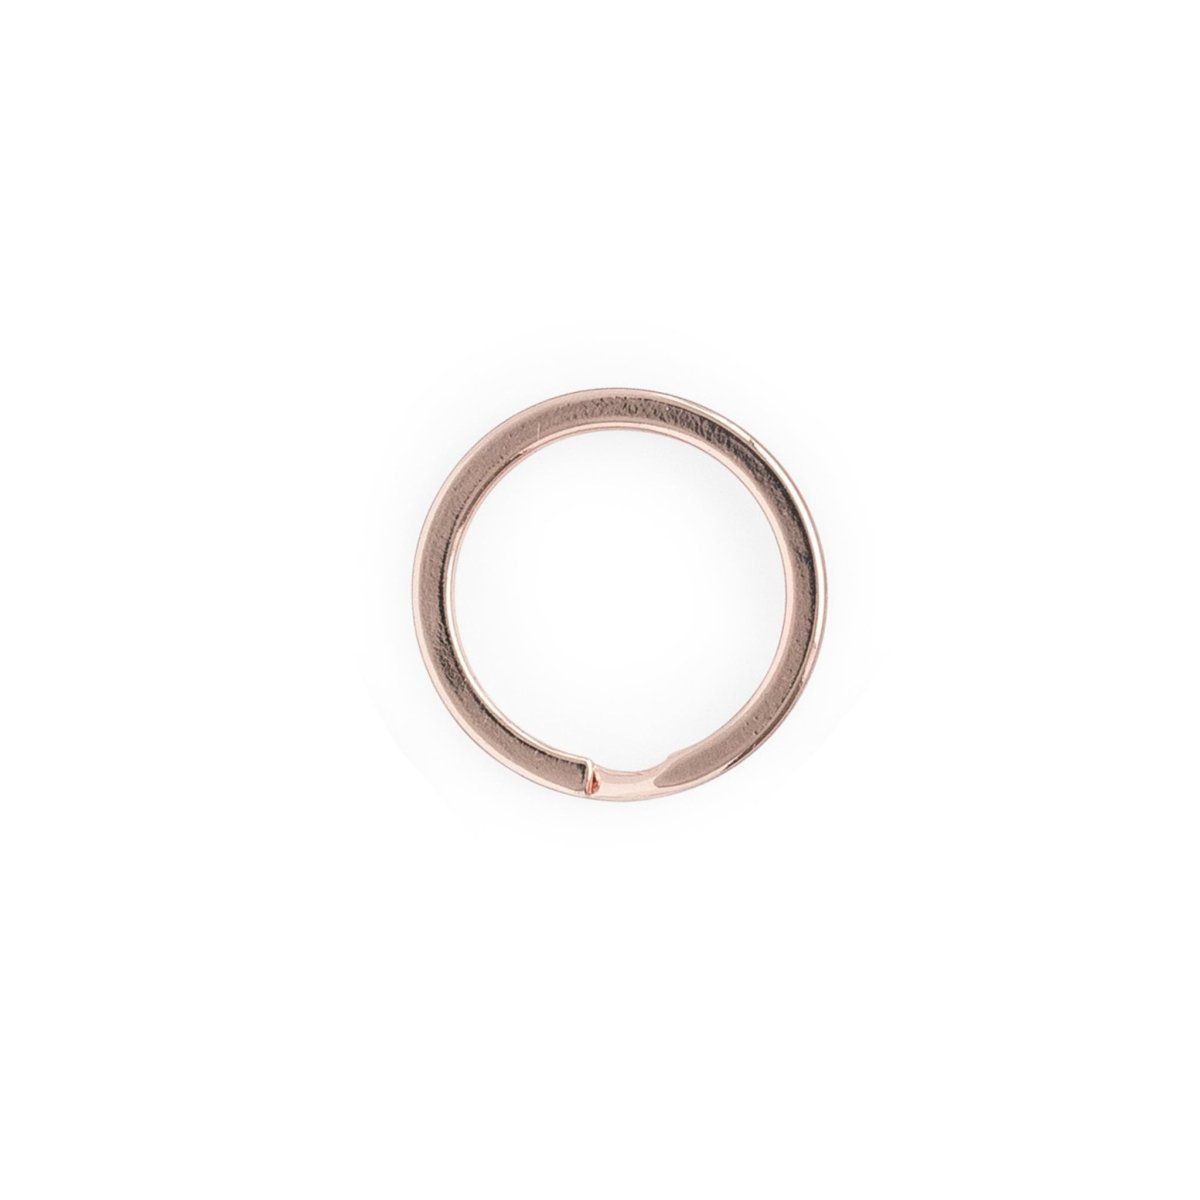 Key Rings Premium Keyrings Small Keyring (25mm) from Cara & Co Craft Supply